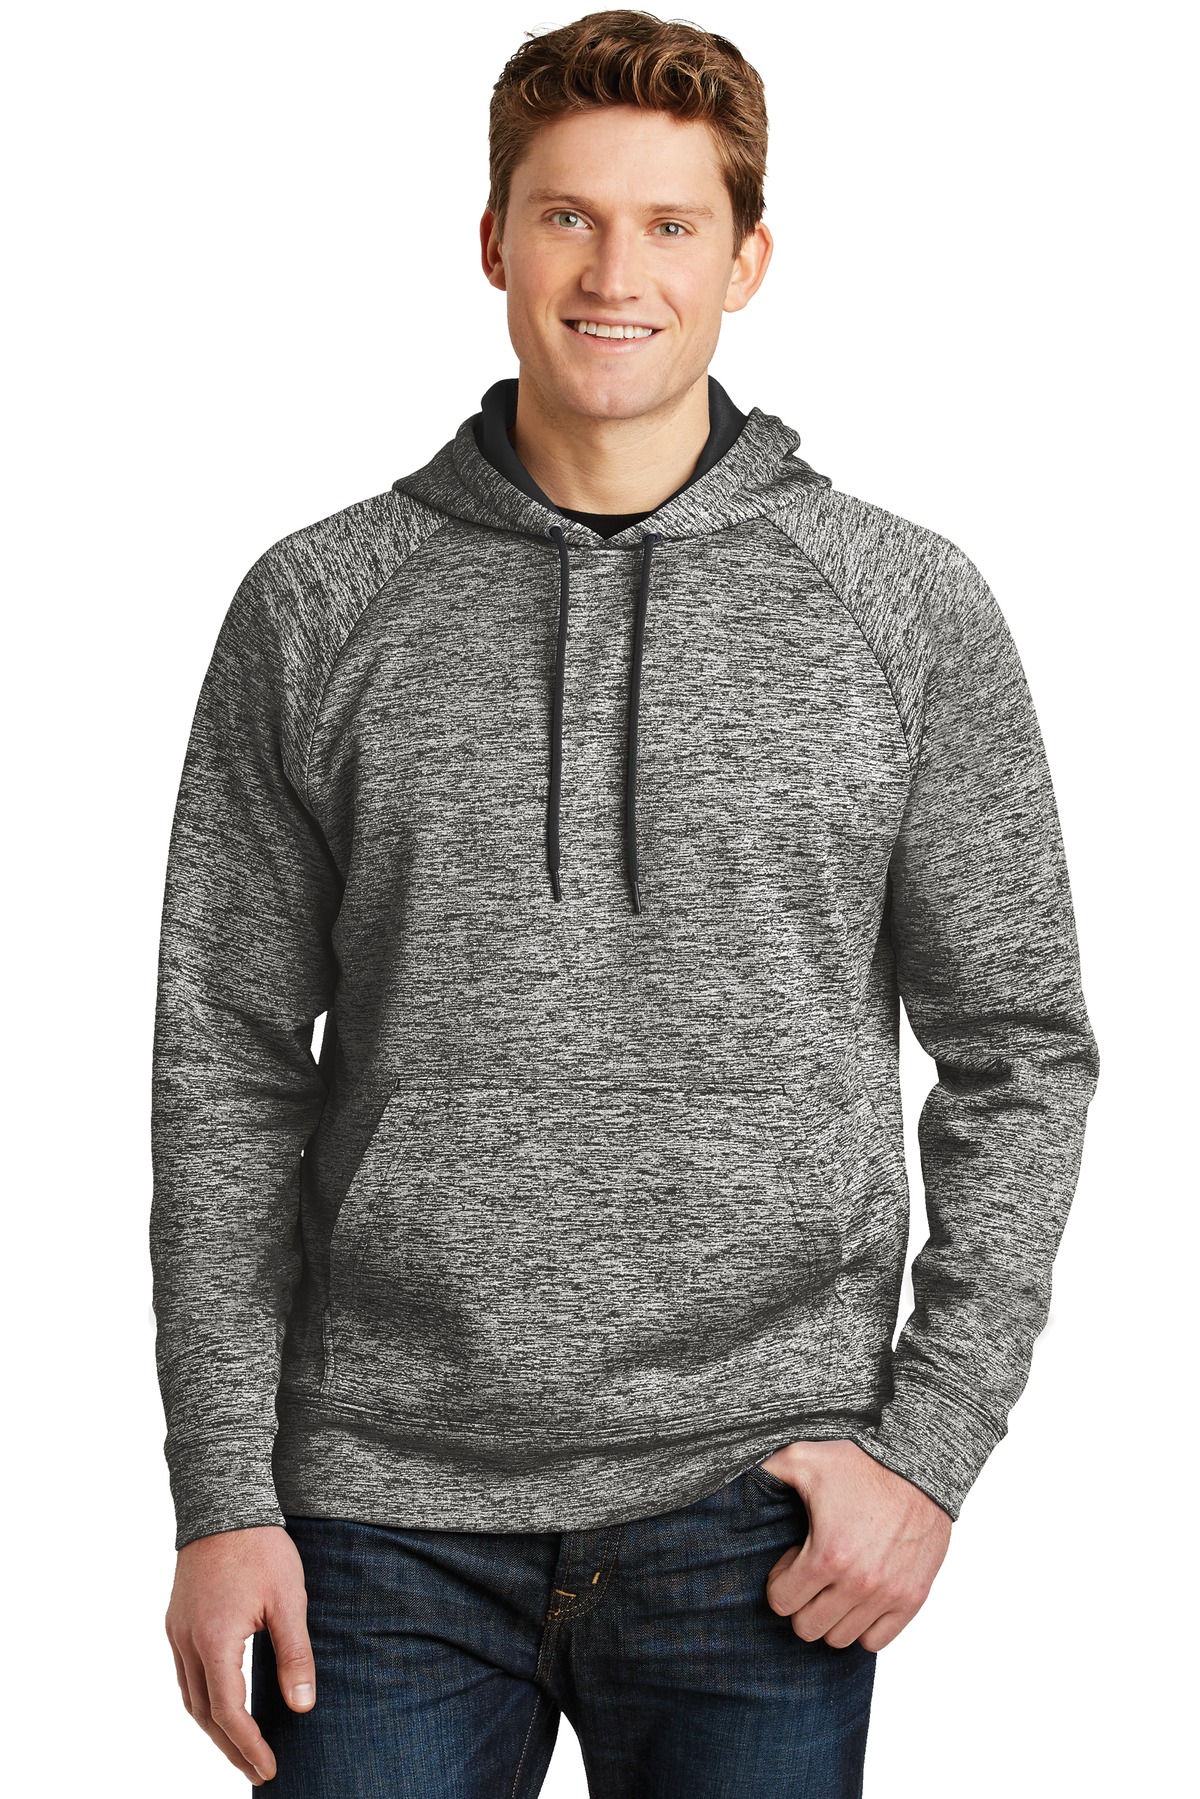 Sport-Tek Hospitality Sweatshirts & Fleece ® PosiCharge® Electric Heather Fleece Hooded Pullover.-Sport-Tek